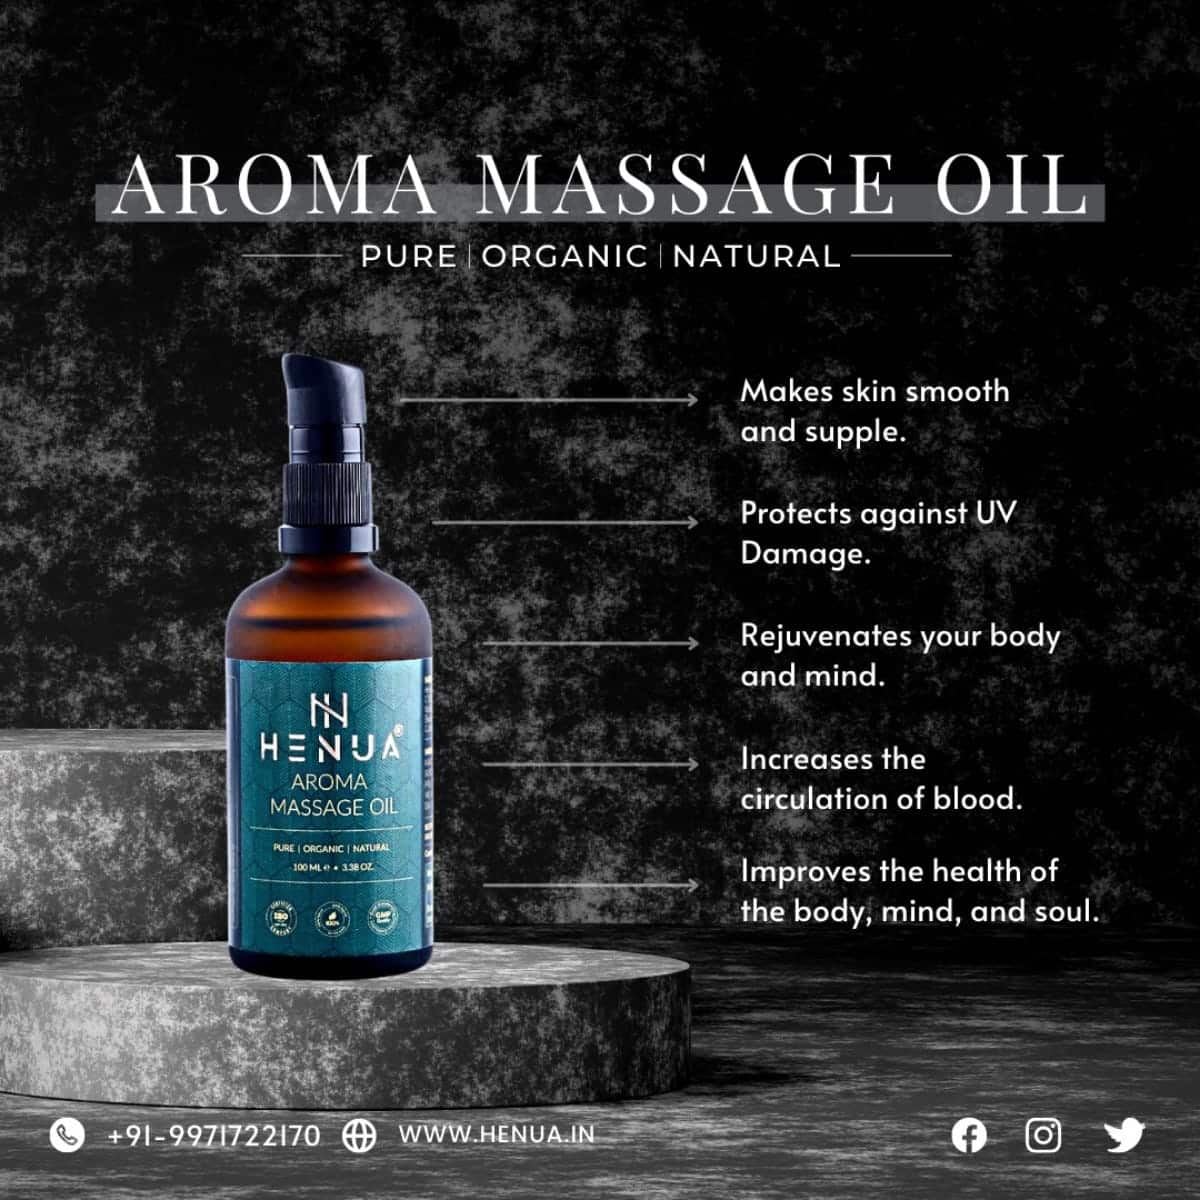 Aroma Message Oils